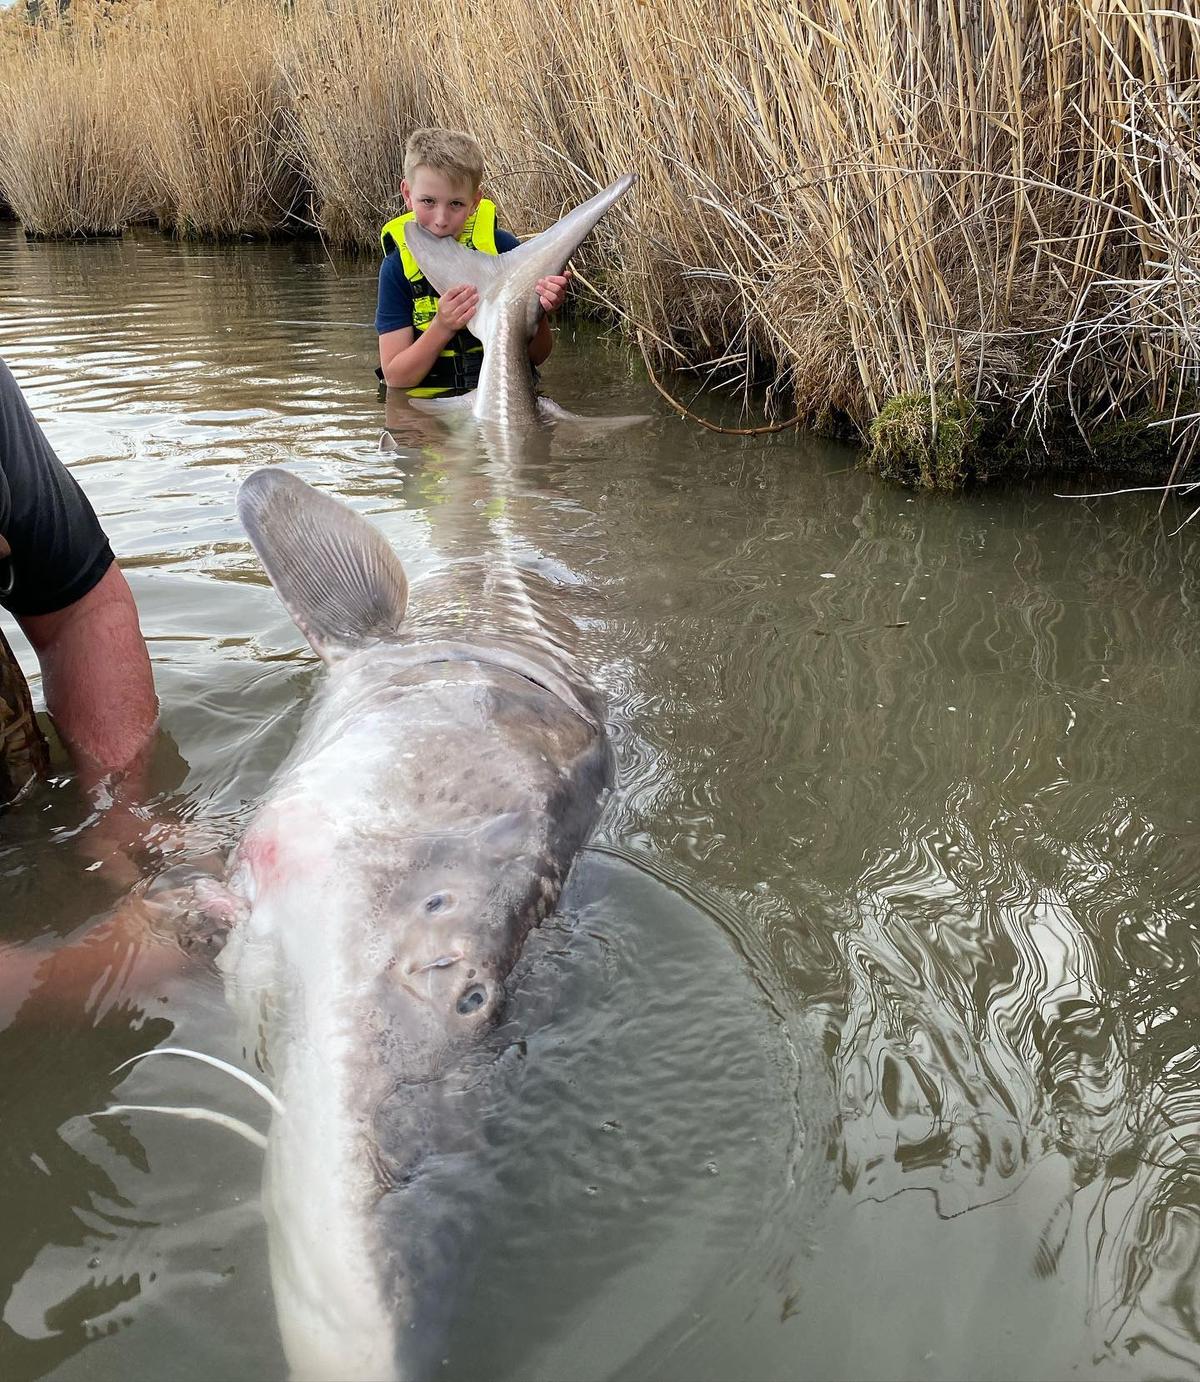 Tyler Grimshaw, 12, "tastes" his near-record-setting sturgeon. (Courtesy of Joe Weisner, <a href="https://www.facebook.com/jonessportfishing/">Jones Sport Fishing</a>)